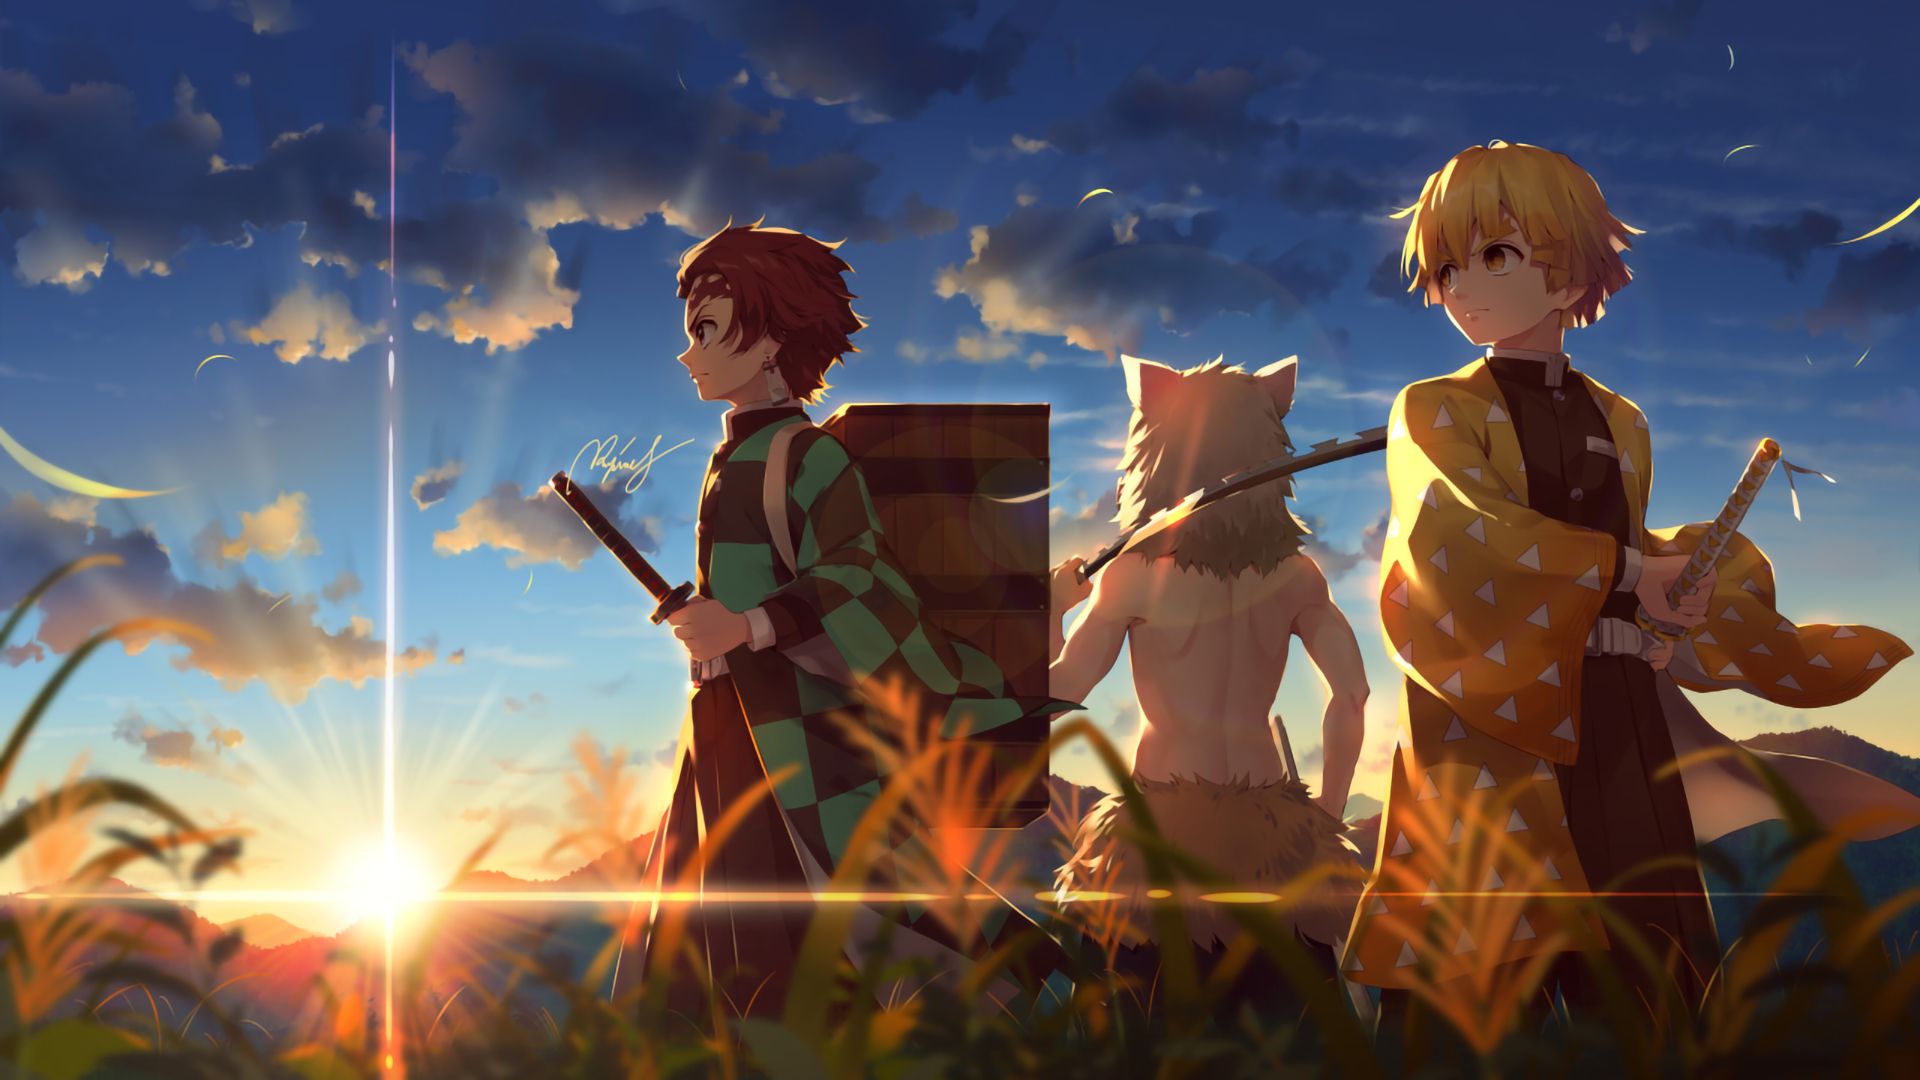 Inosuke Hashibira, Tanjirou Kamado and Zenitsu Agatsuma Wallpaper, HD Anime 4K Wallpaper, Image, Photo and Background